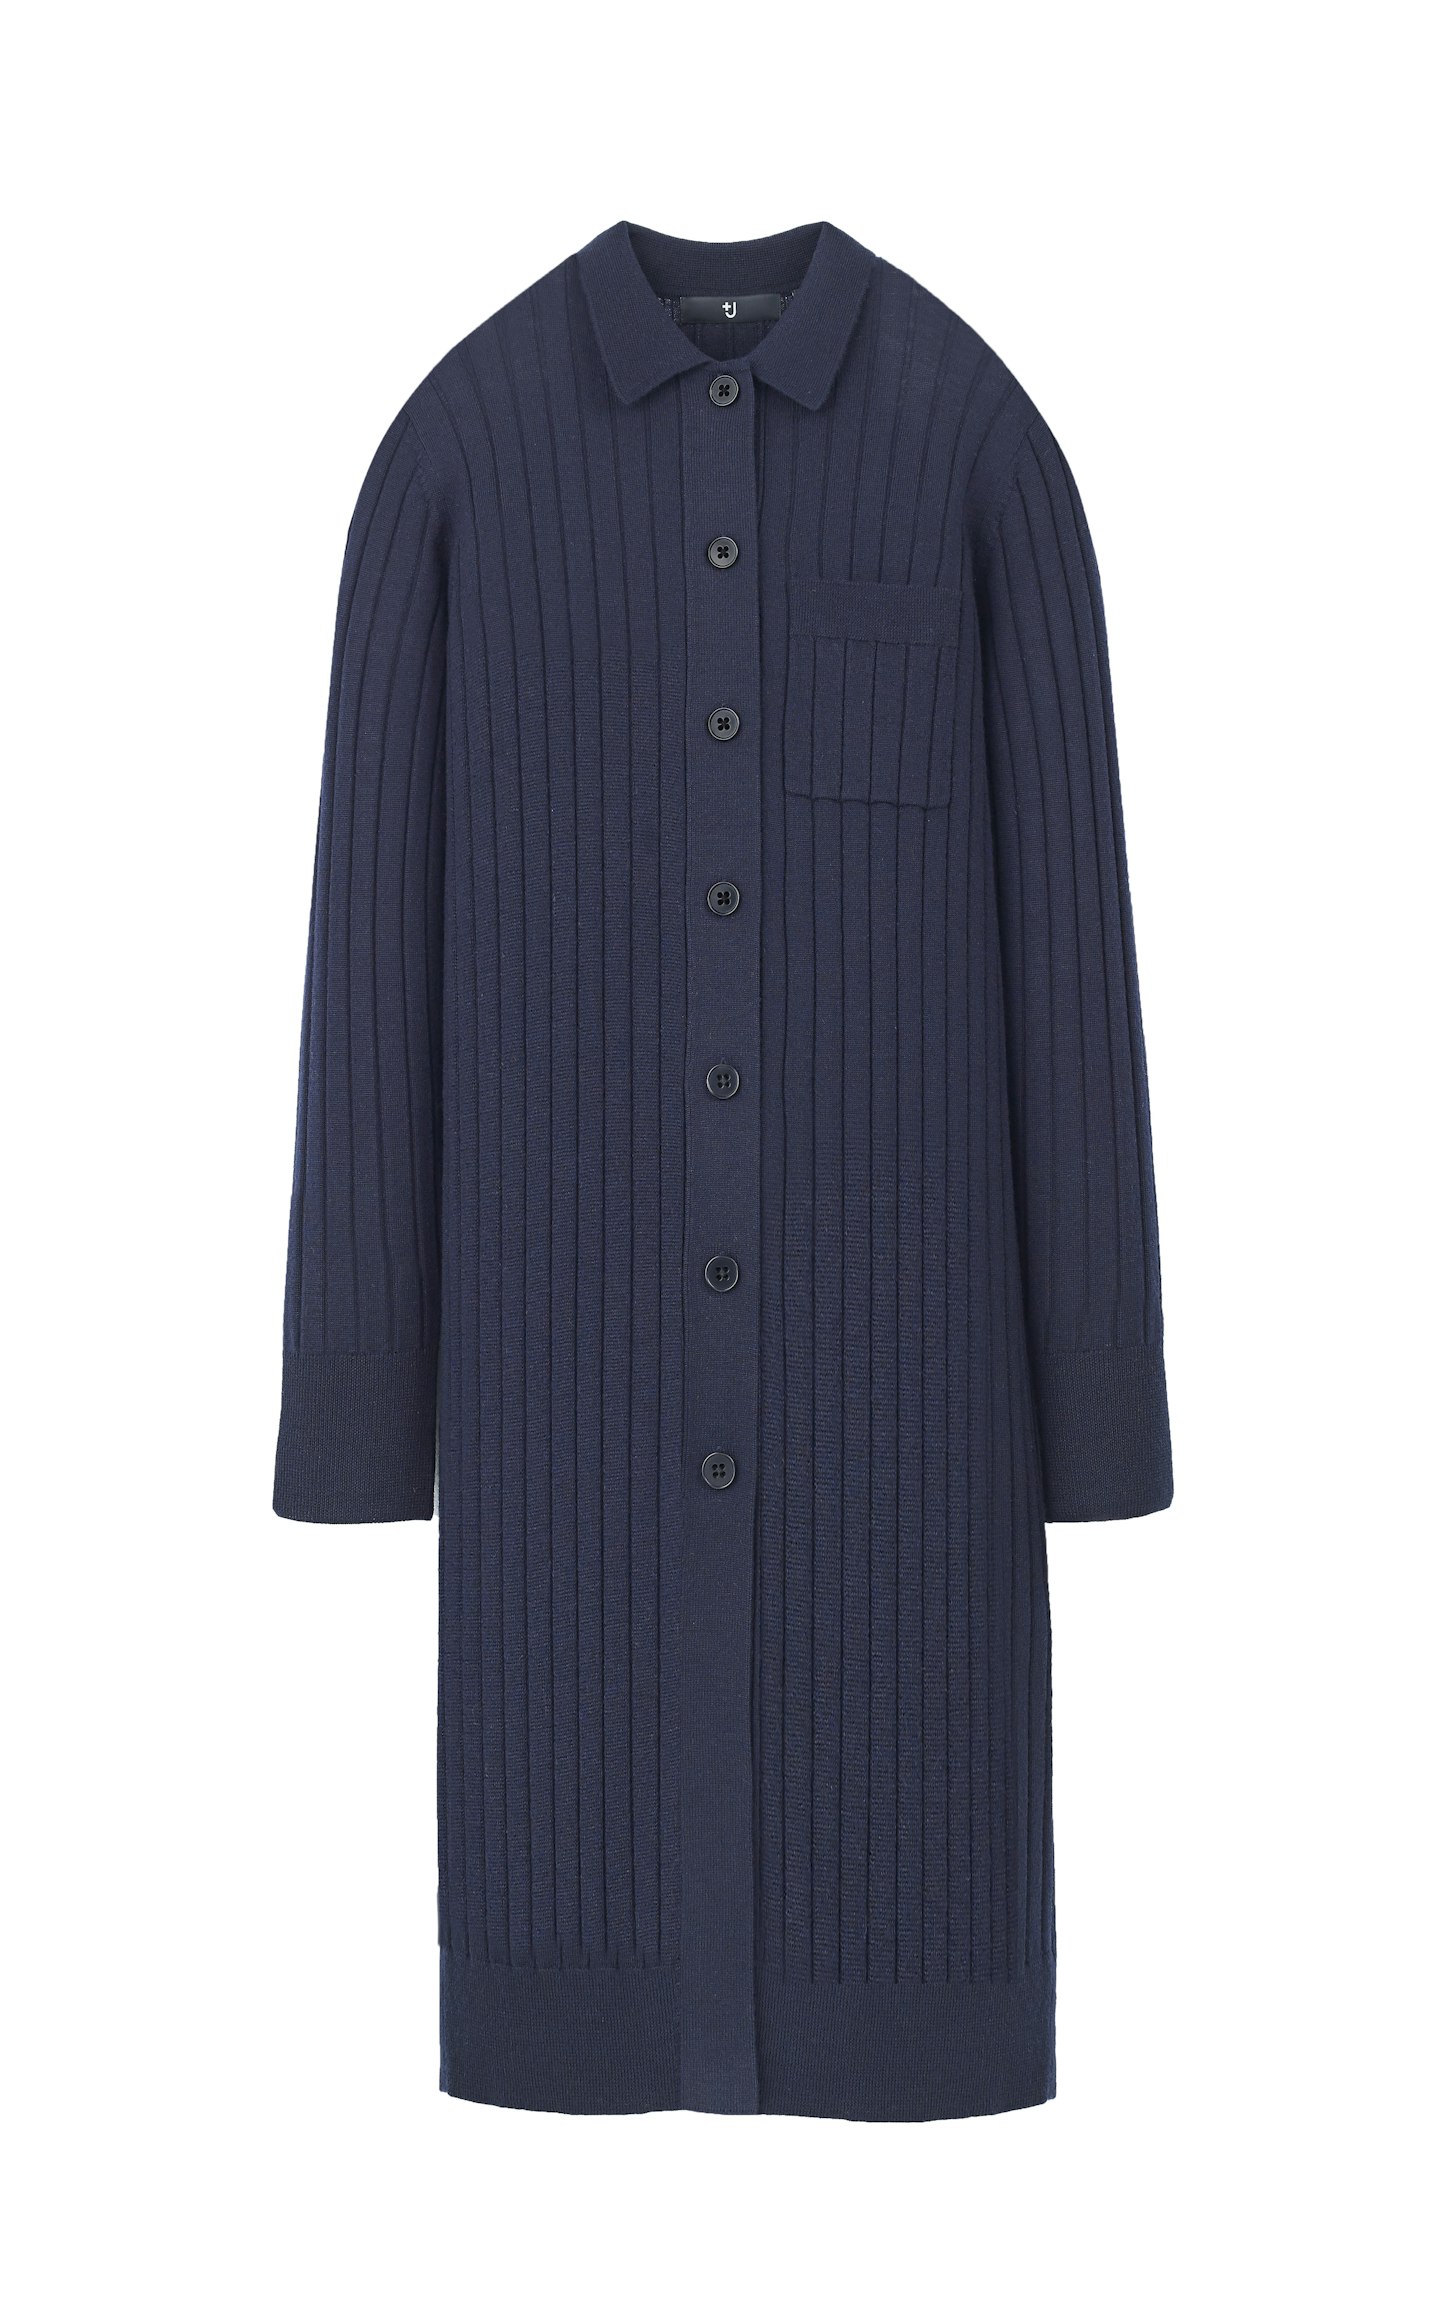 100% Extra Fine Merino Wool Ribbed Long Cardigan, £49.90